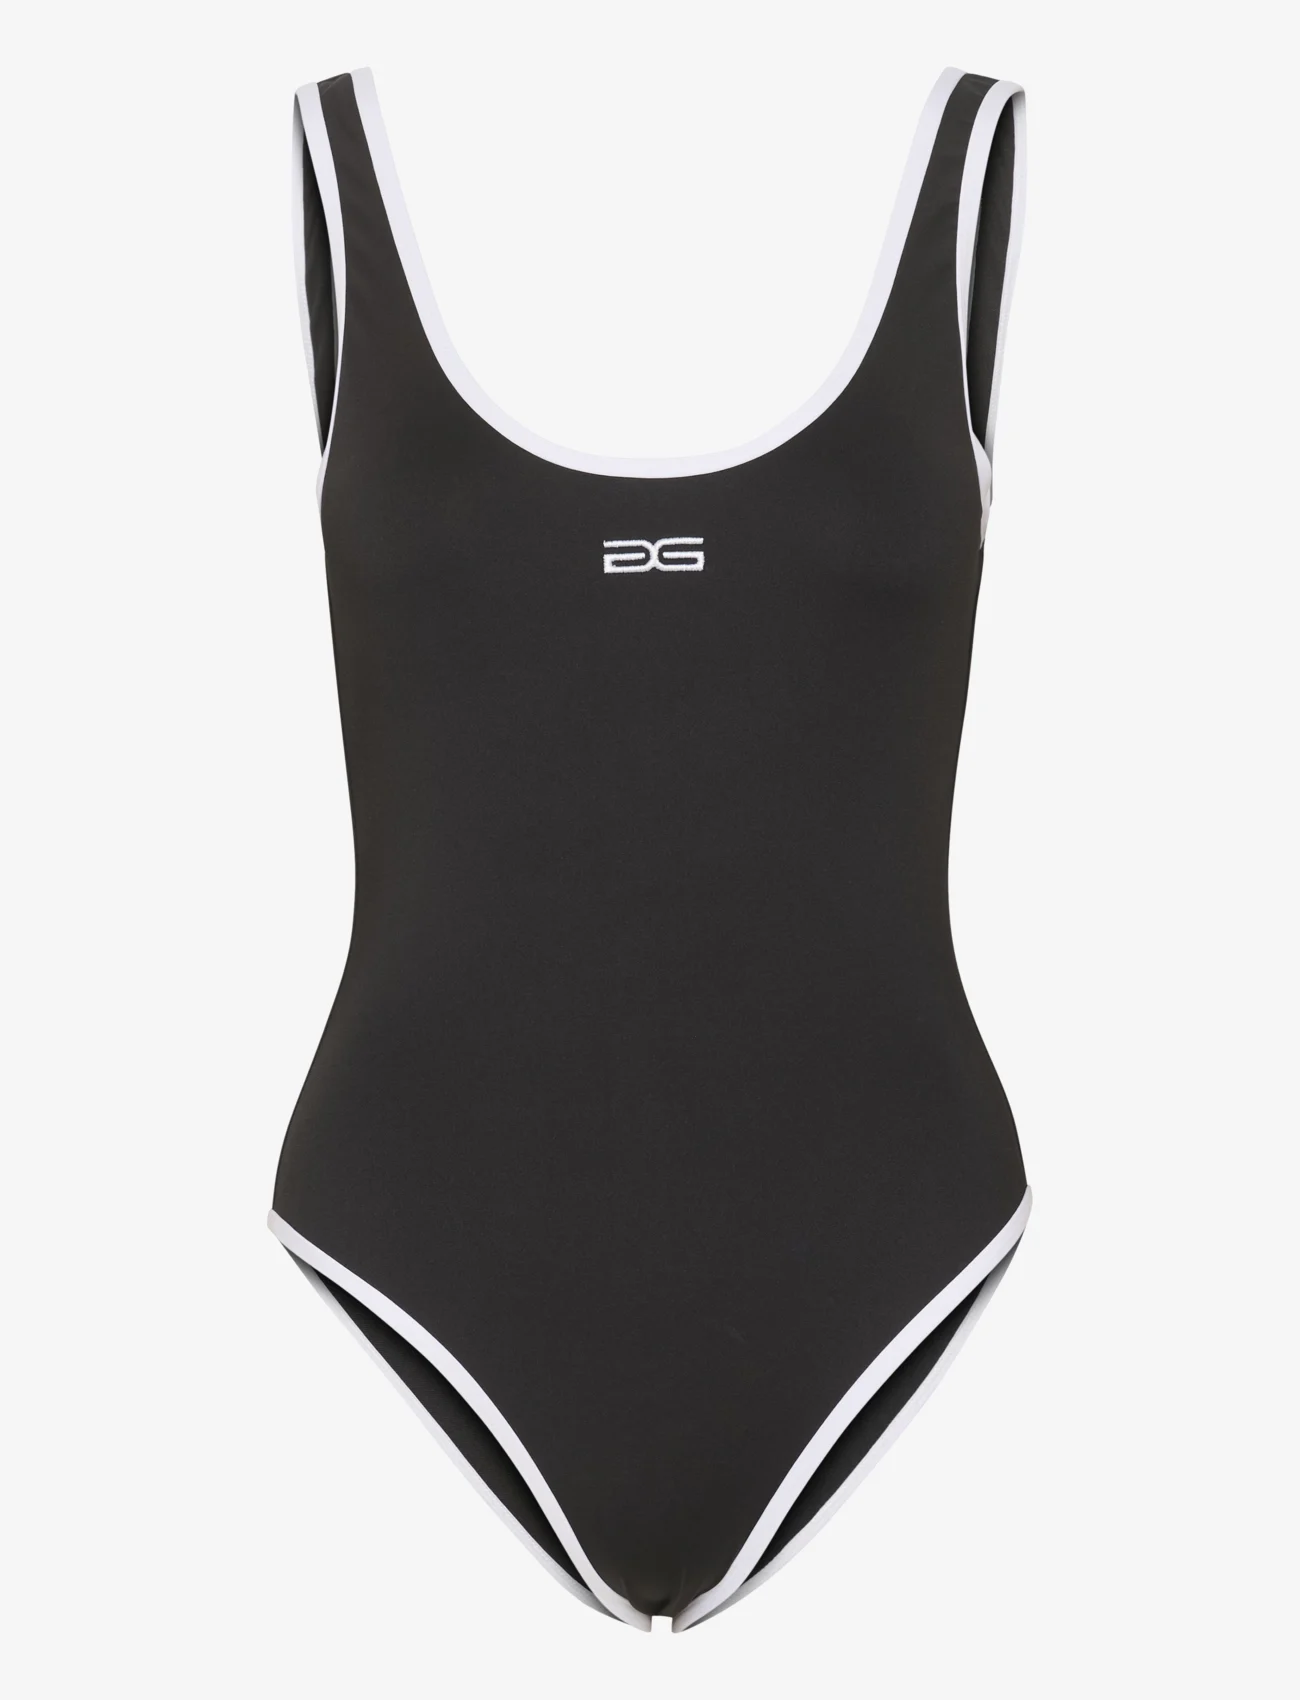 Gestuz - SifaGZ swimsuit - moterims - black - 0